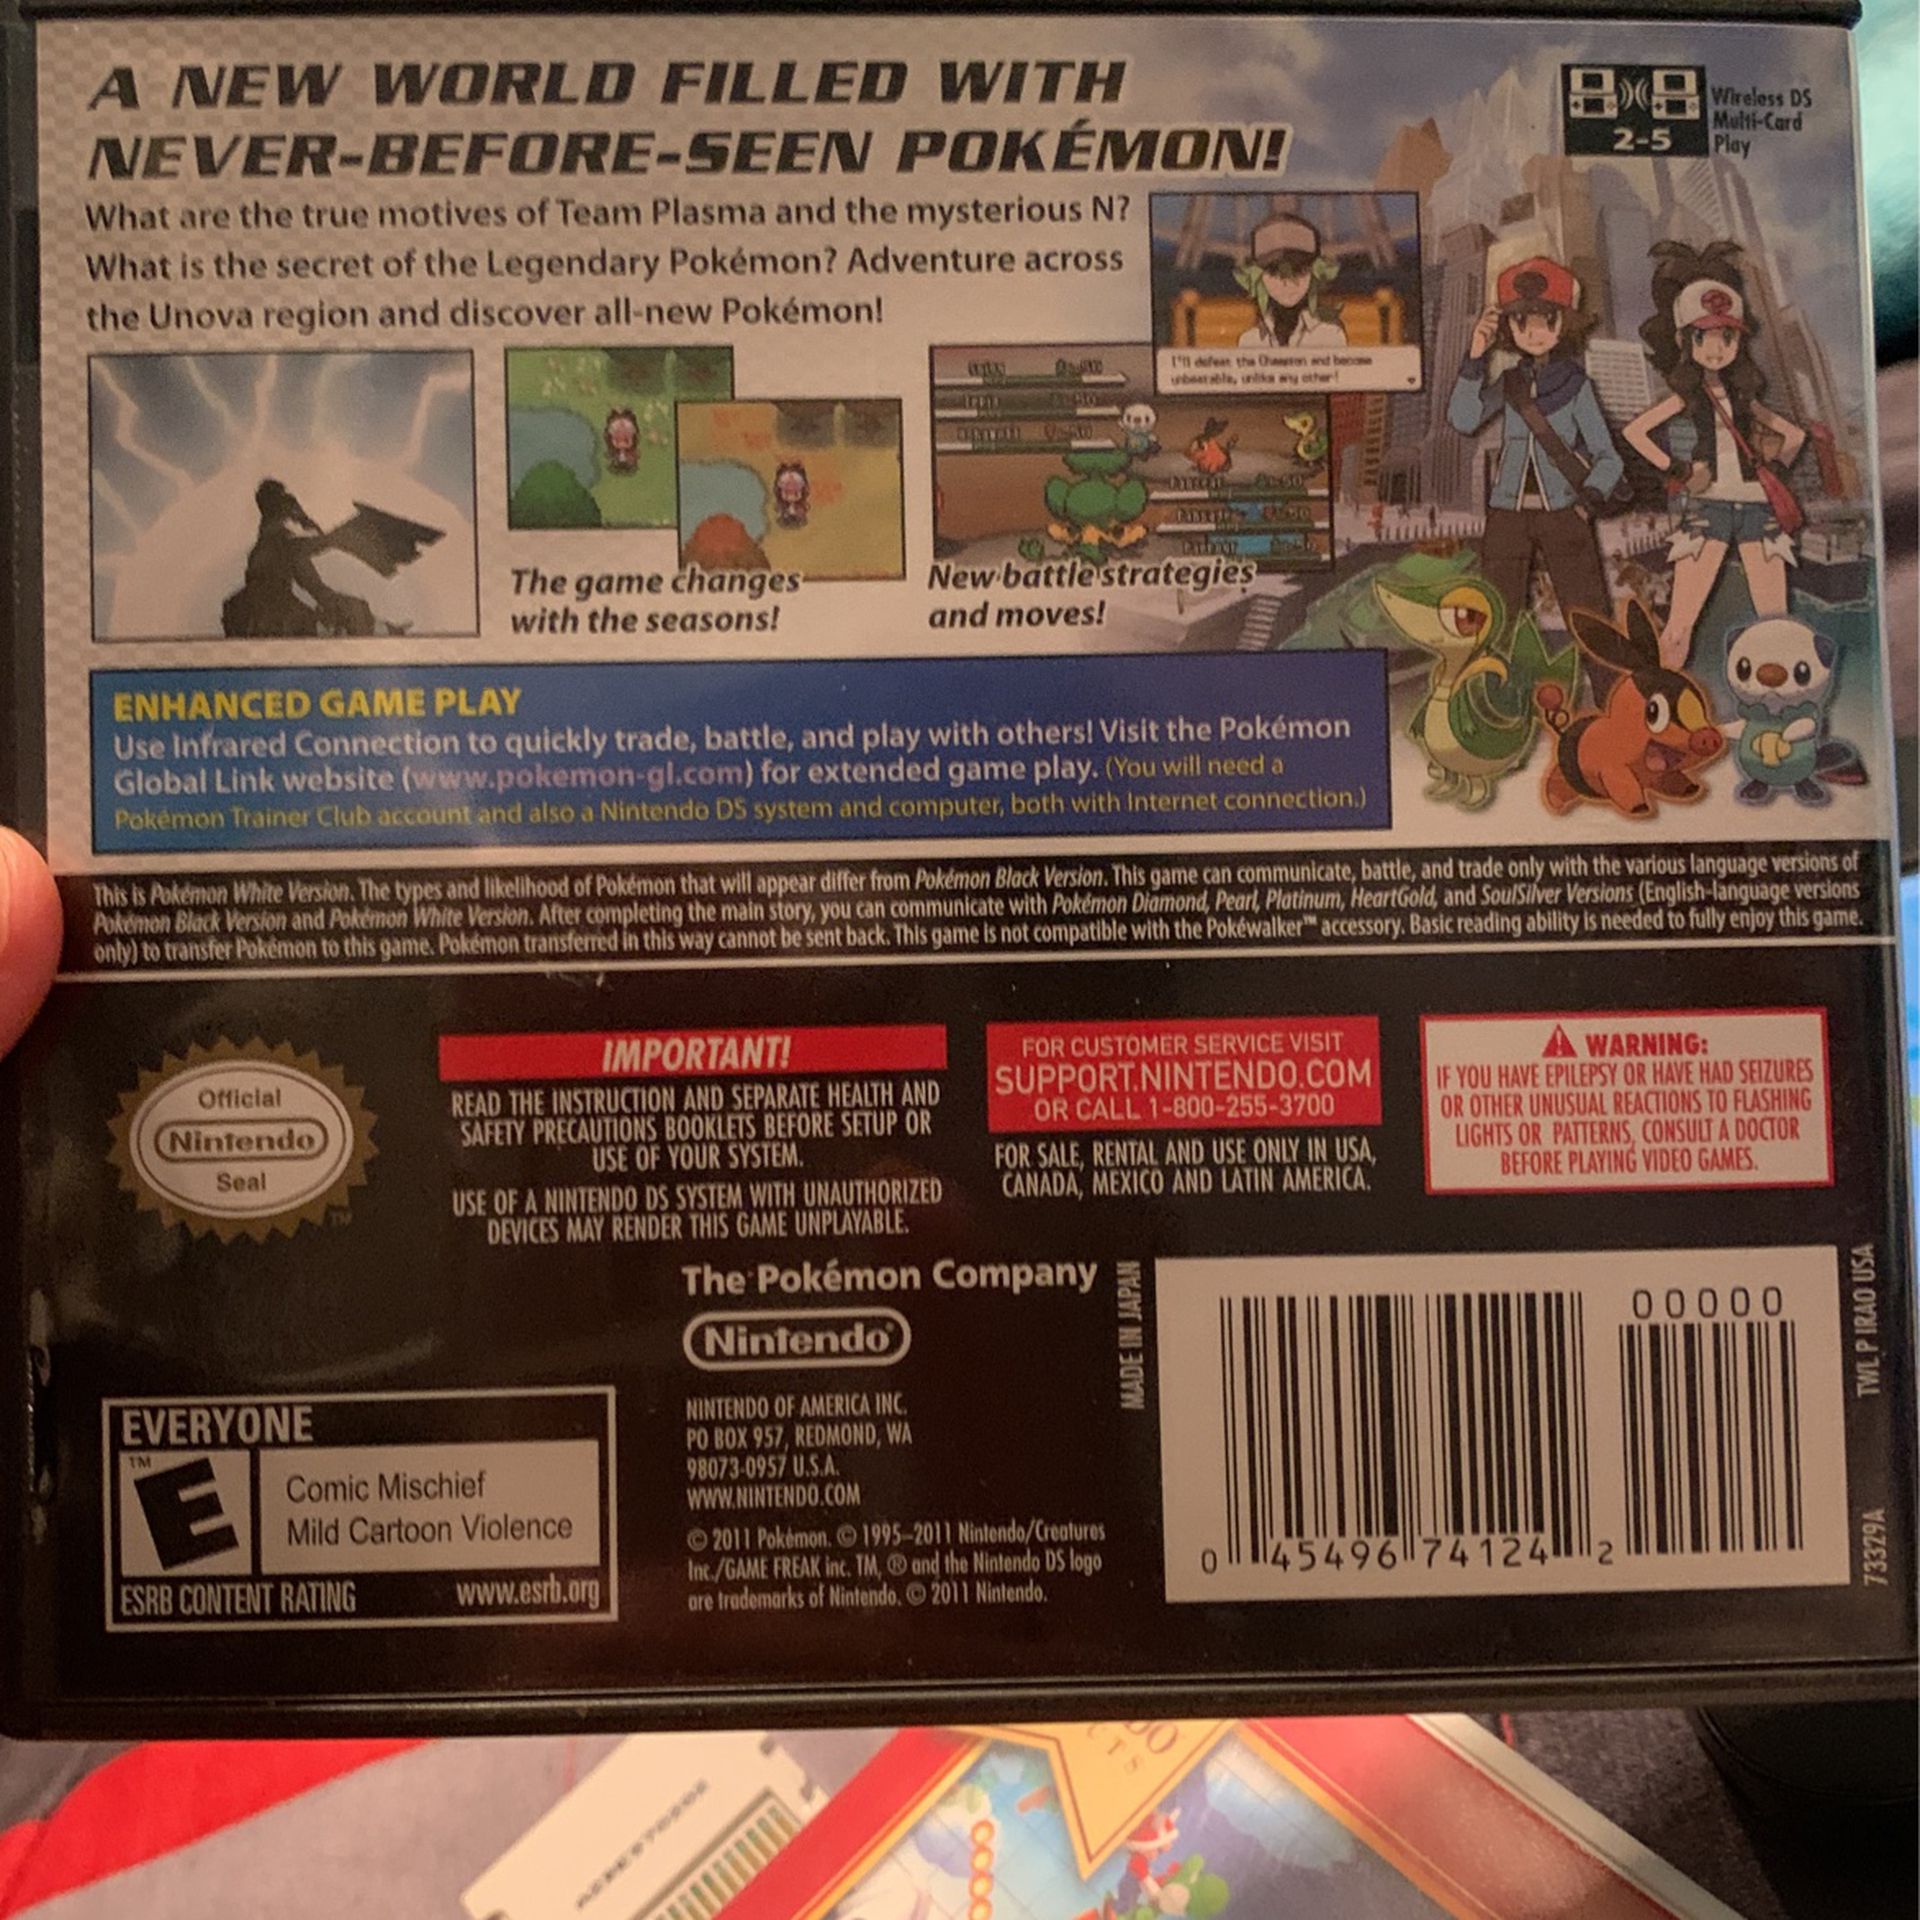 The Official Unova Pokedex & Guide: Volume 2 Pokemon Black & White NO  POSTER for Sale in Los Angeles, CA - OfferUp